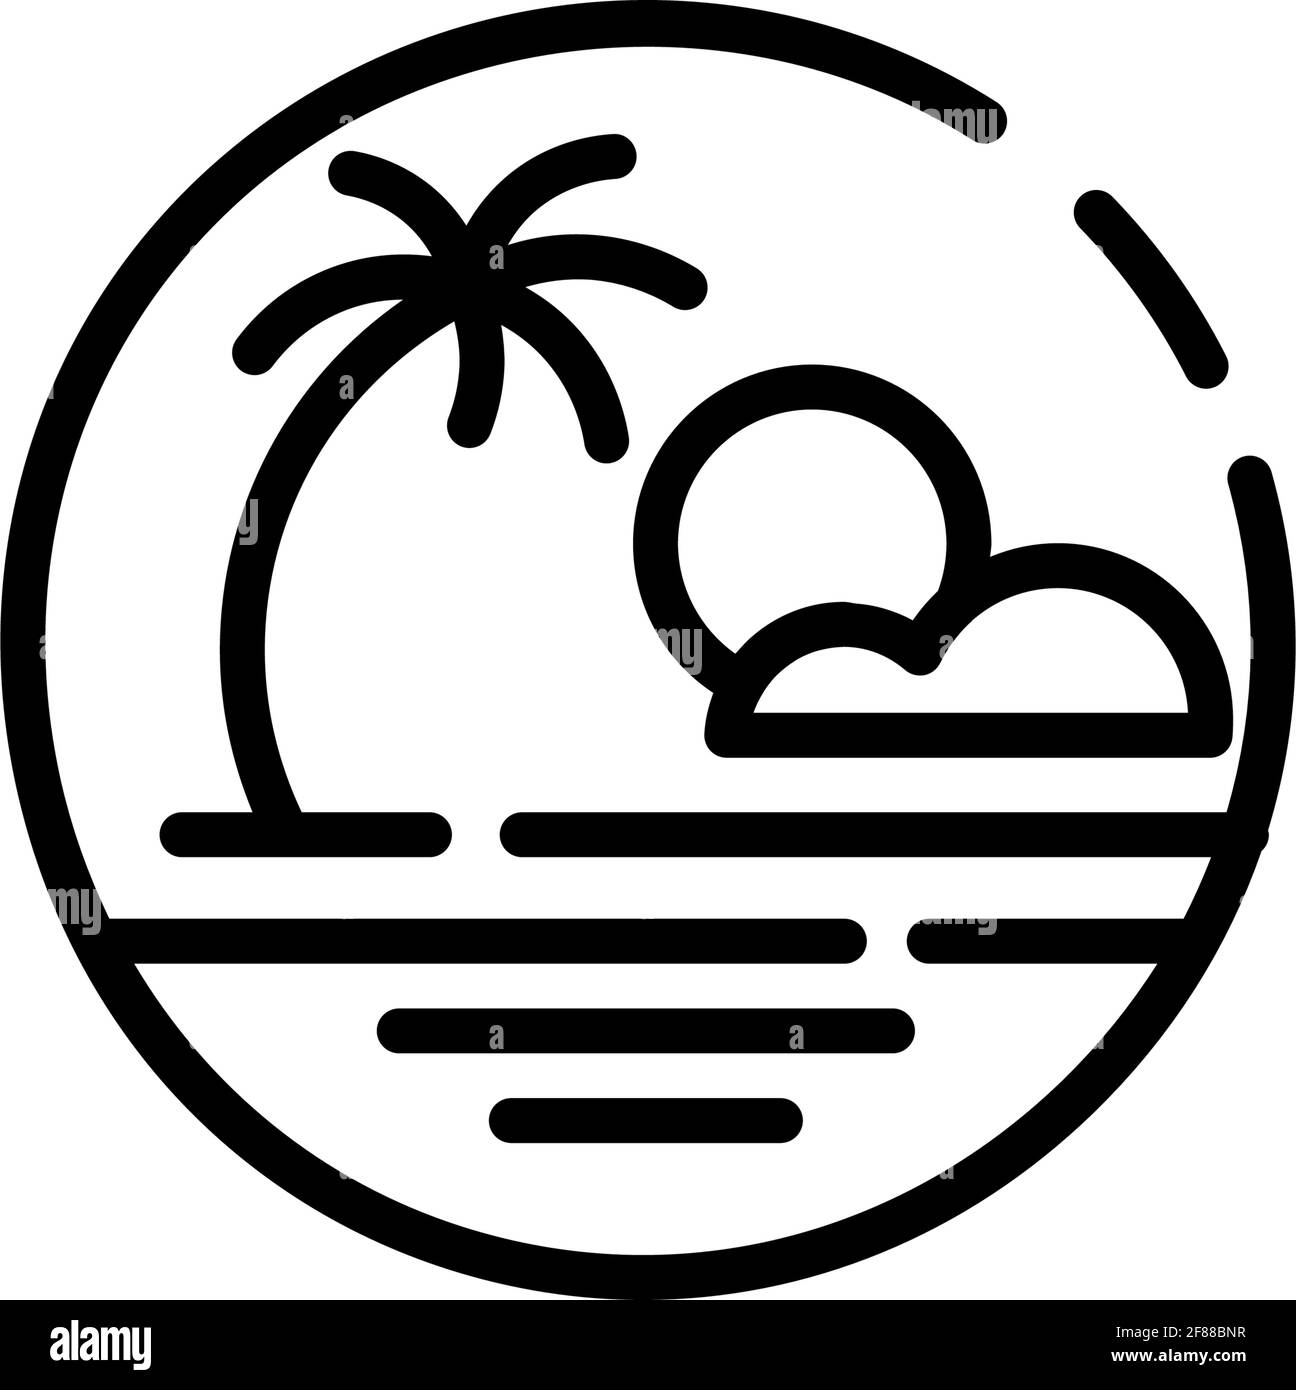 Sommer Strand Umriss Symbol Vektor Illustration, Strand und Meer Logo Design Inspiration für Vorlagen Stock Vektor